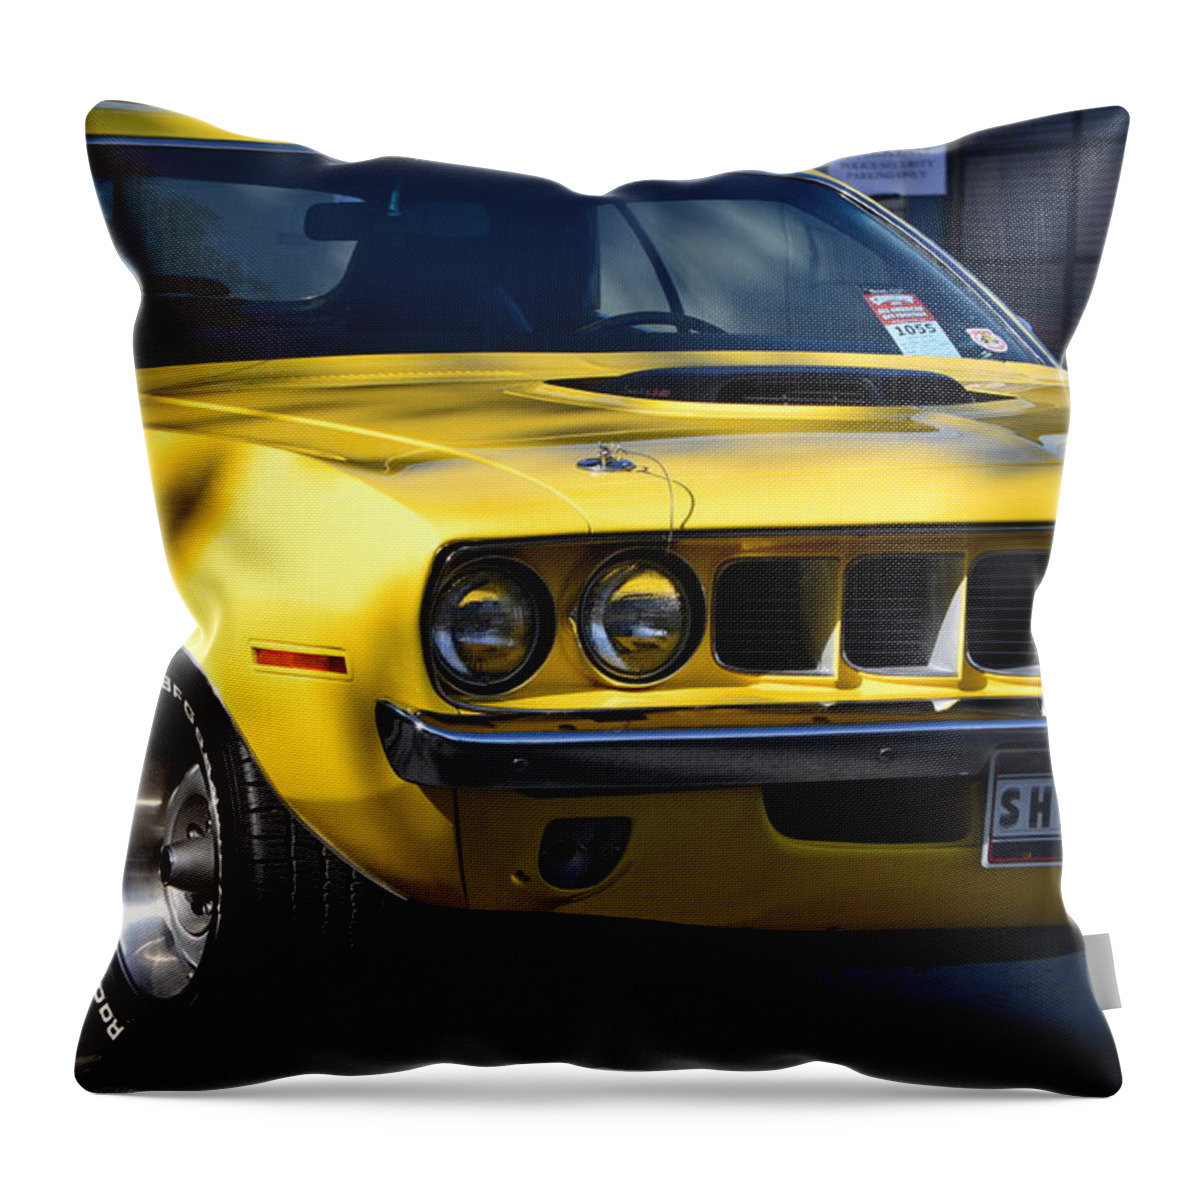  Throw Pillow featuring the photograph Yellow Cuda by Dean Ferreira